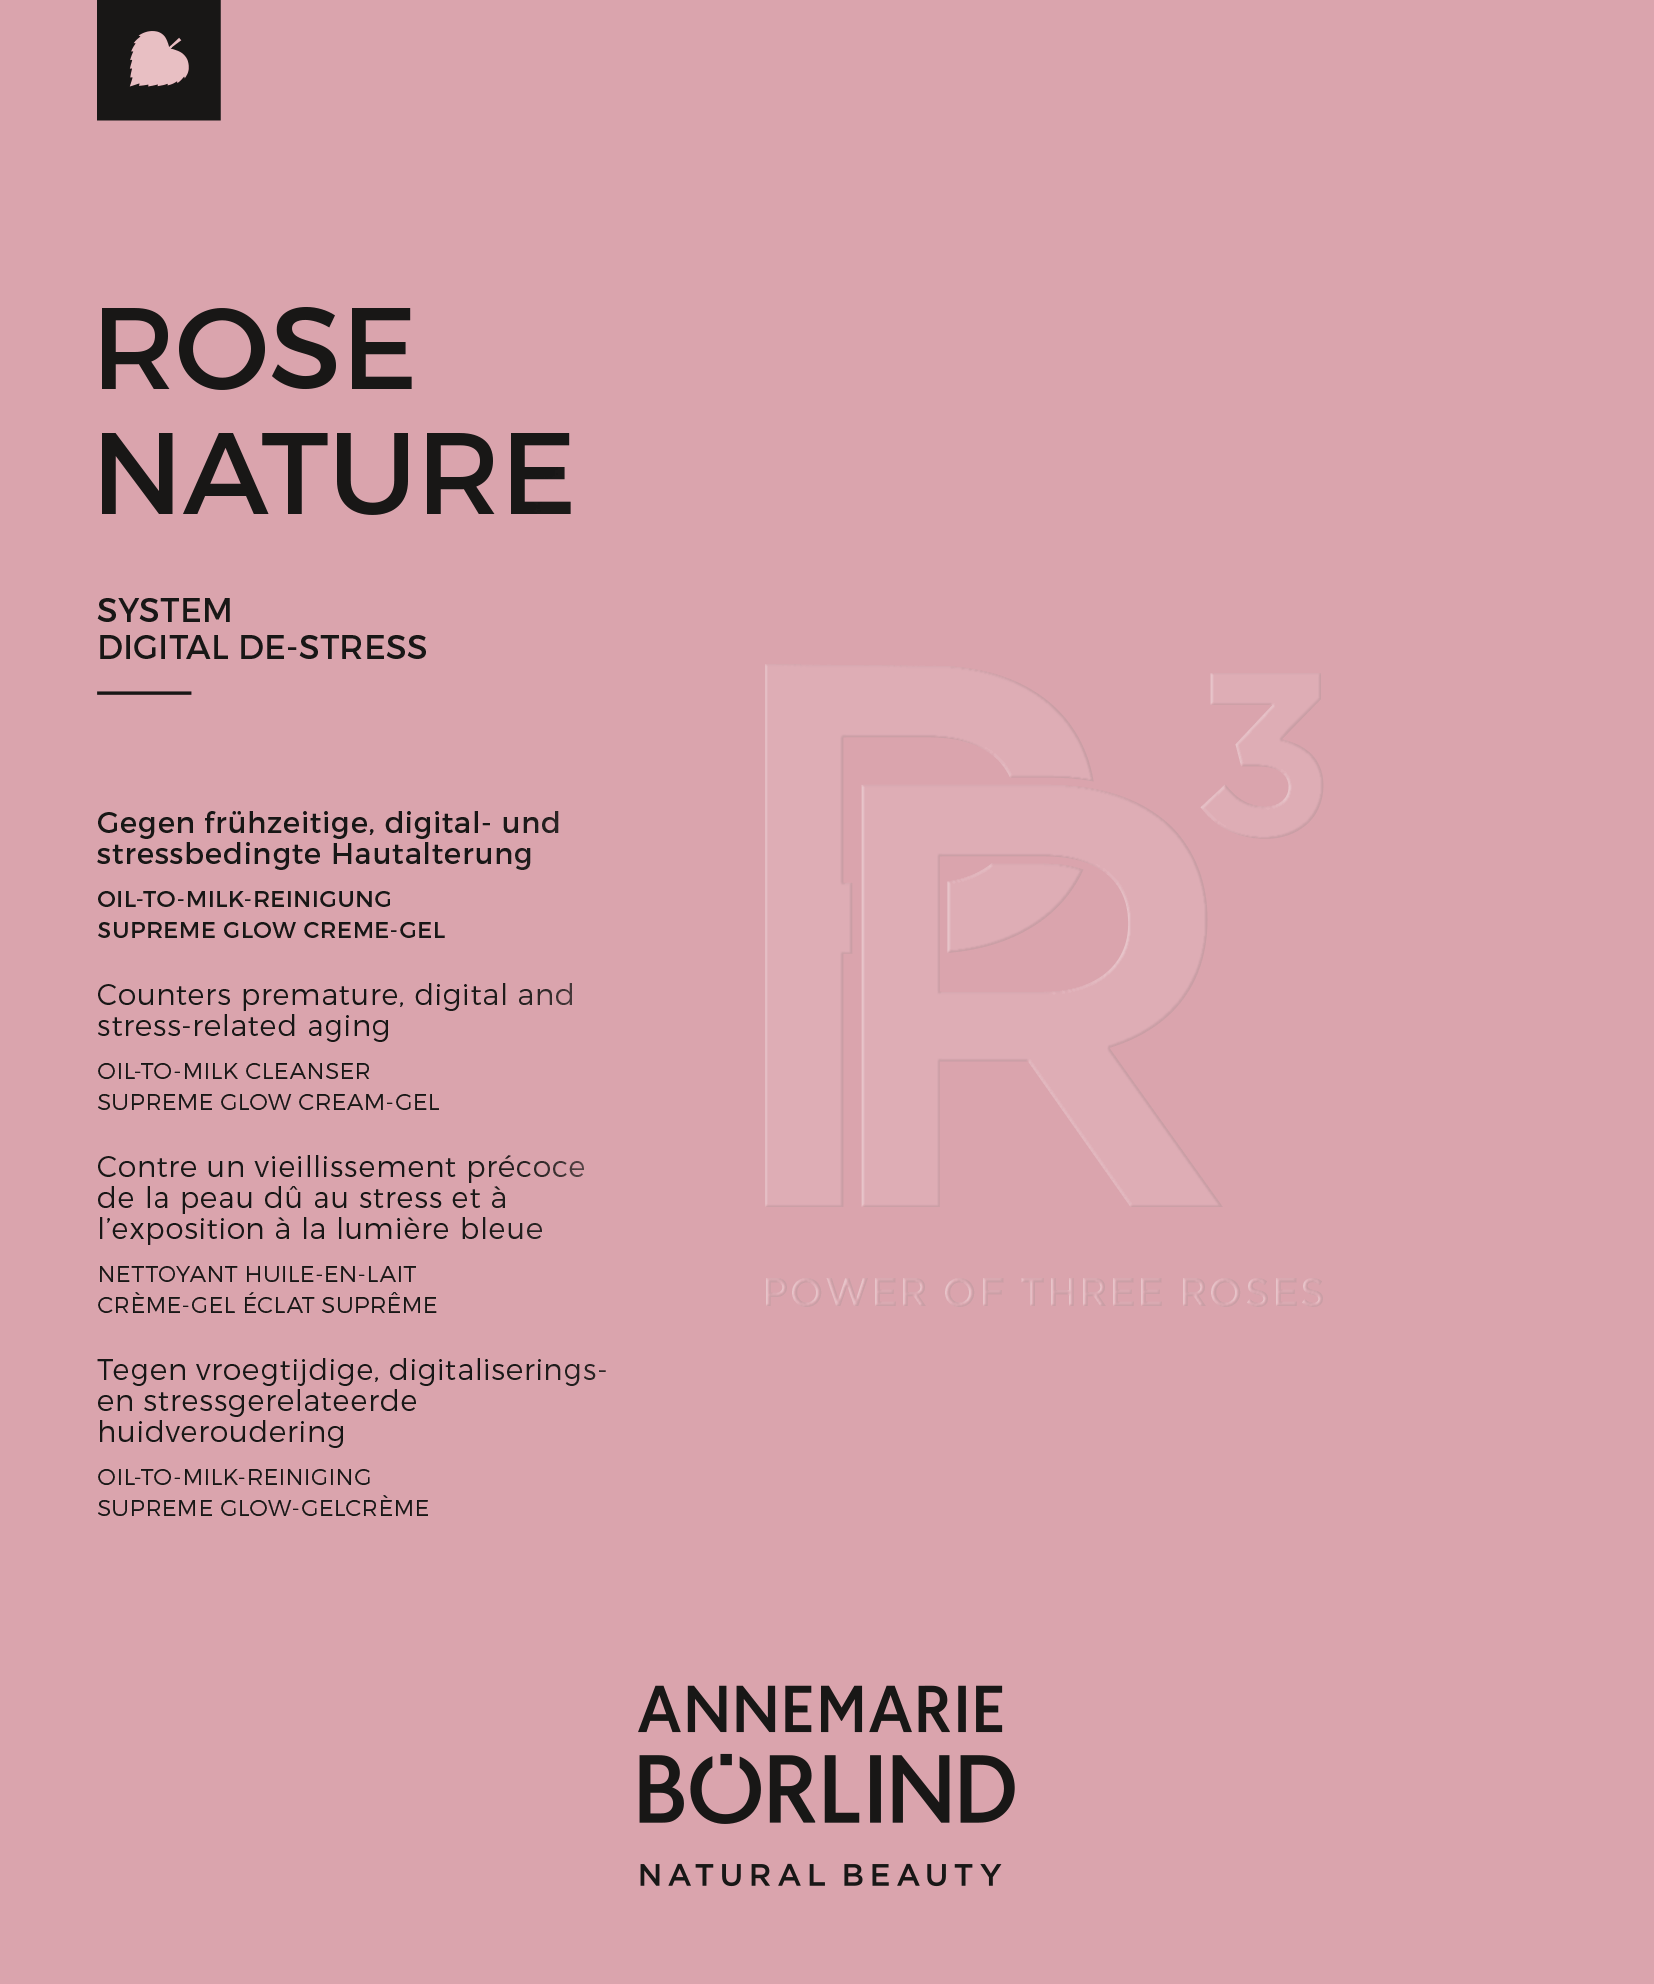 ROSE NATURE